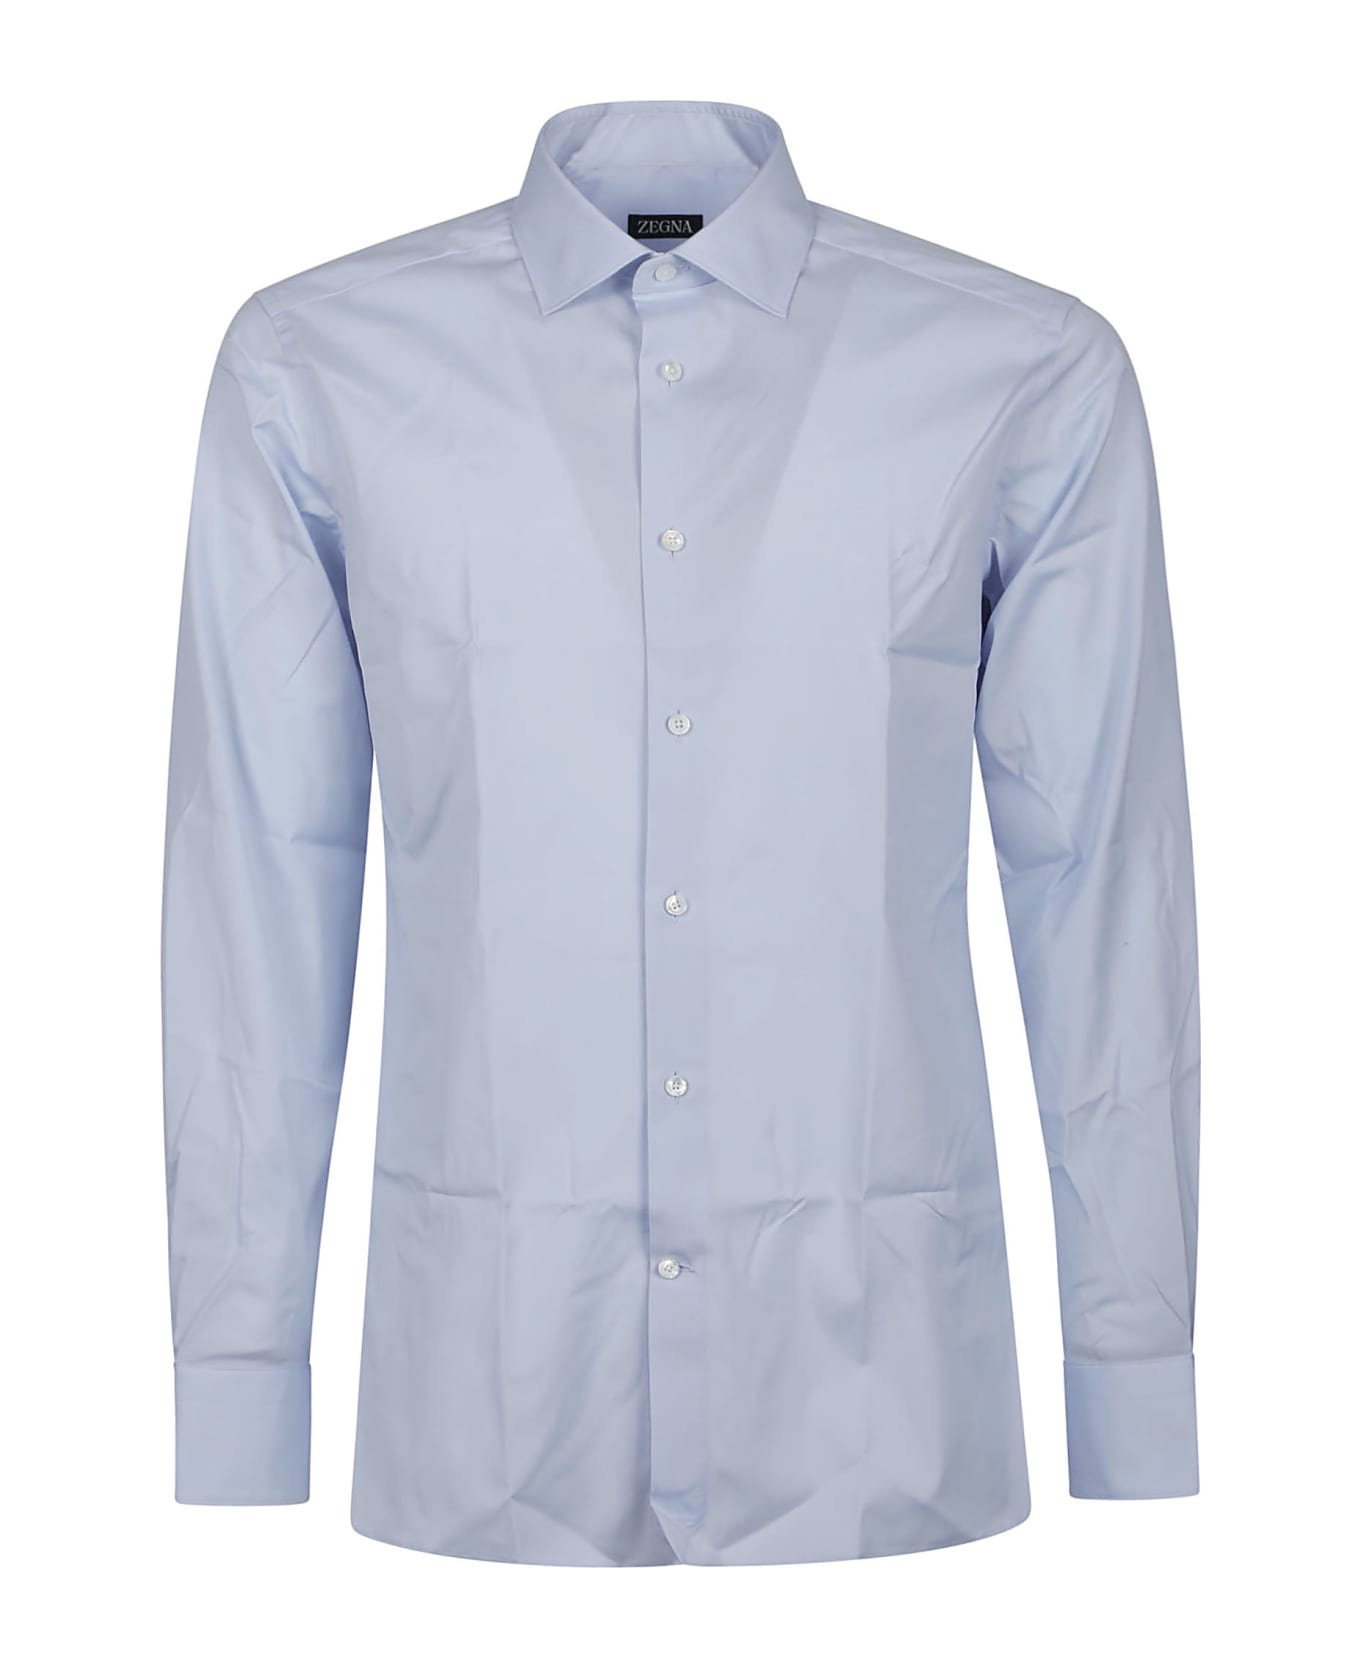 Zegna Long Sleeve Shirt - Azzurro